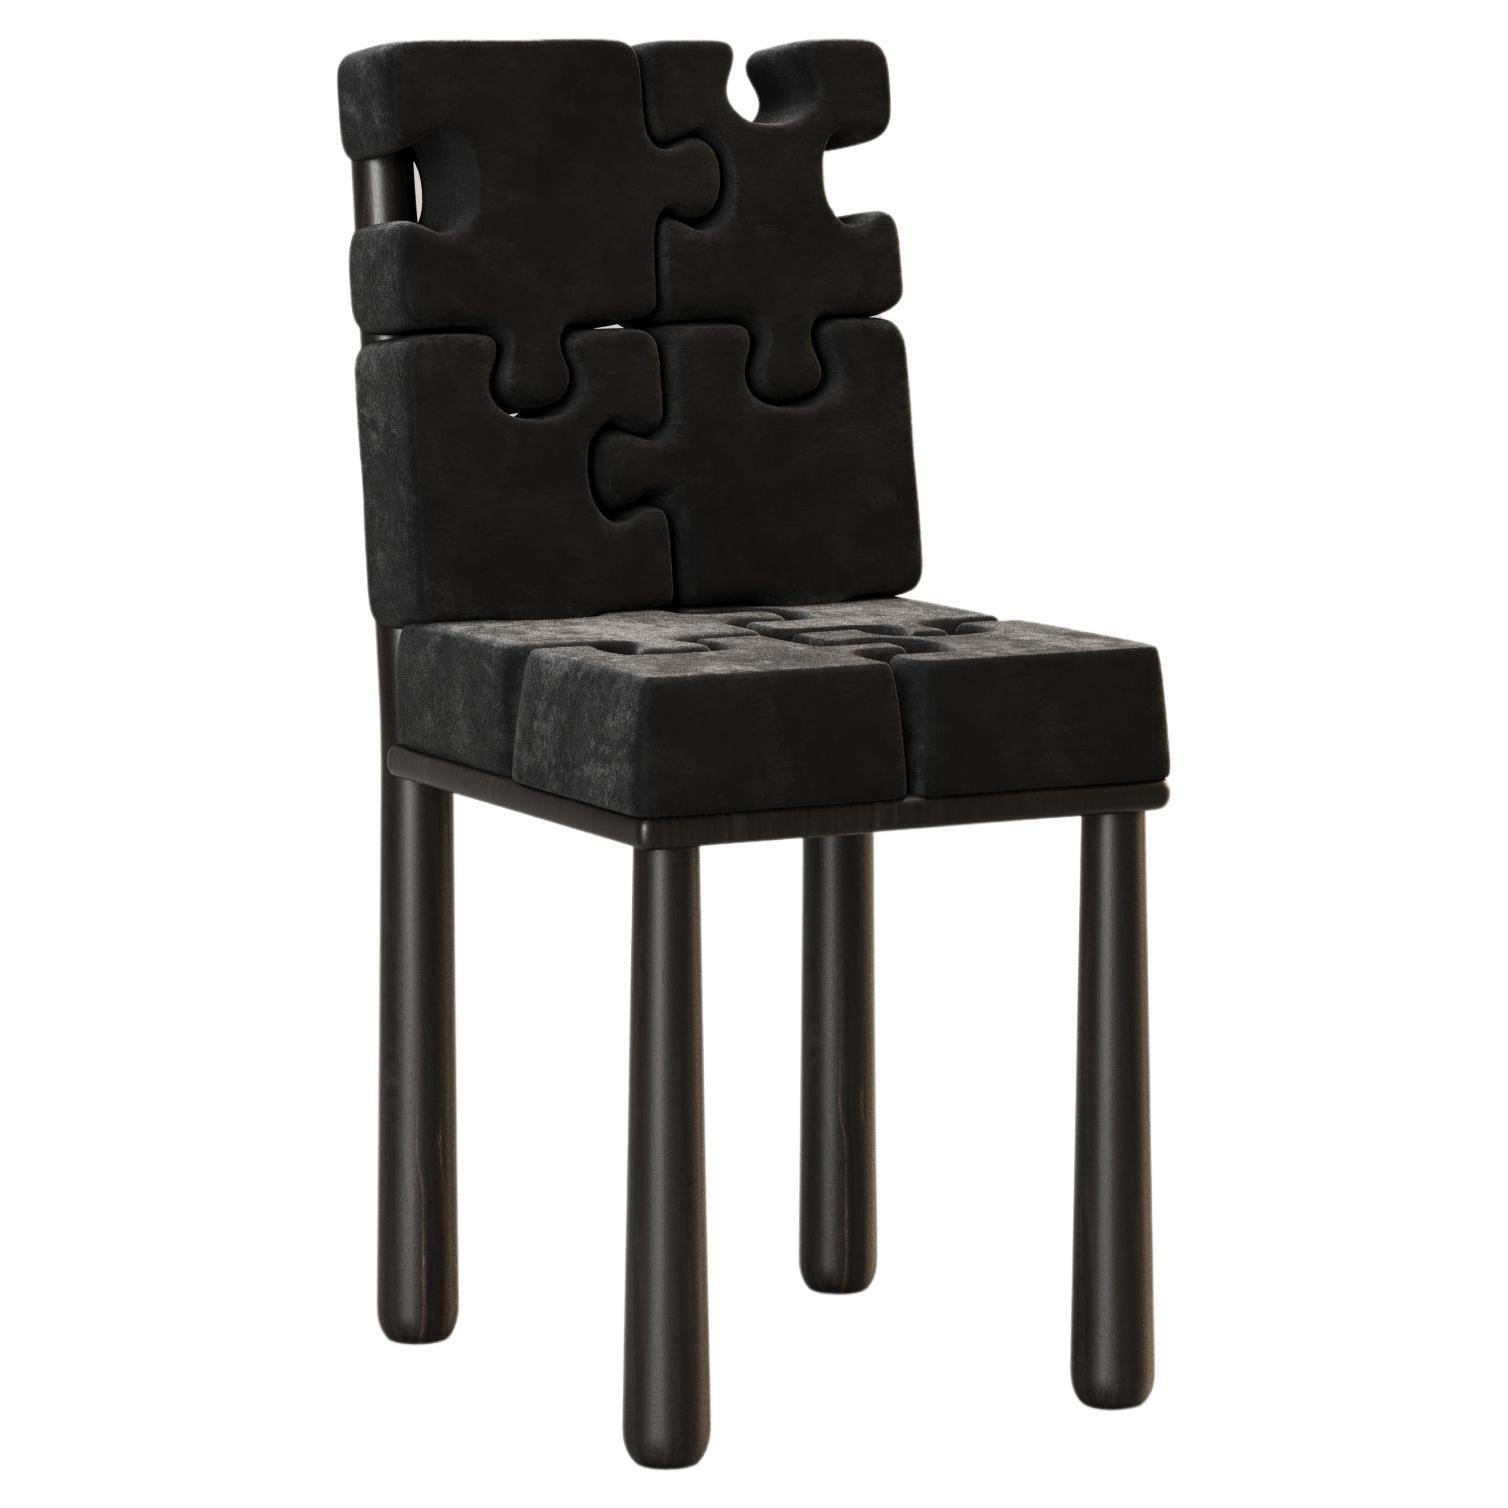 L'INSOLENTE Velvet Chair in Black by Alexandre Ligios, REP by Tuleste Factory For Sale